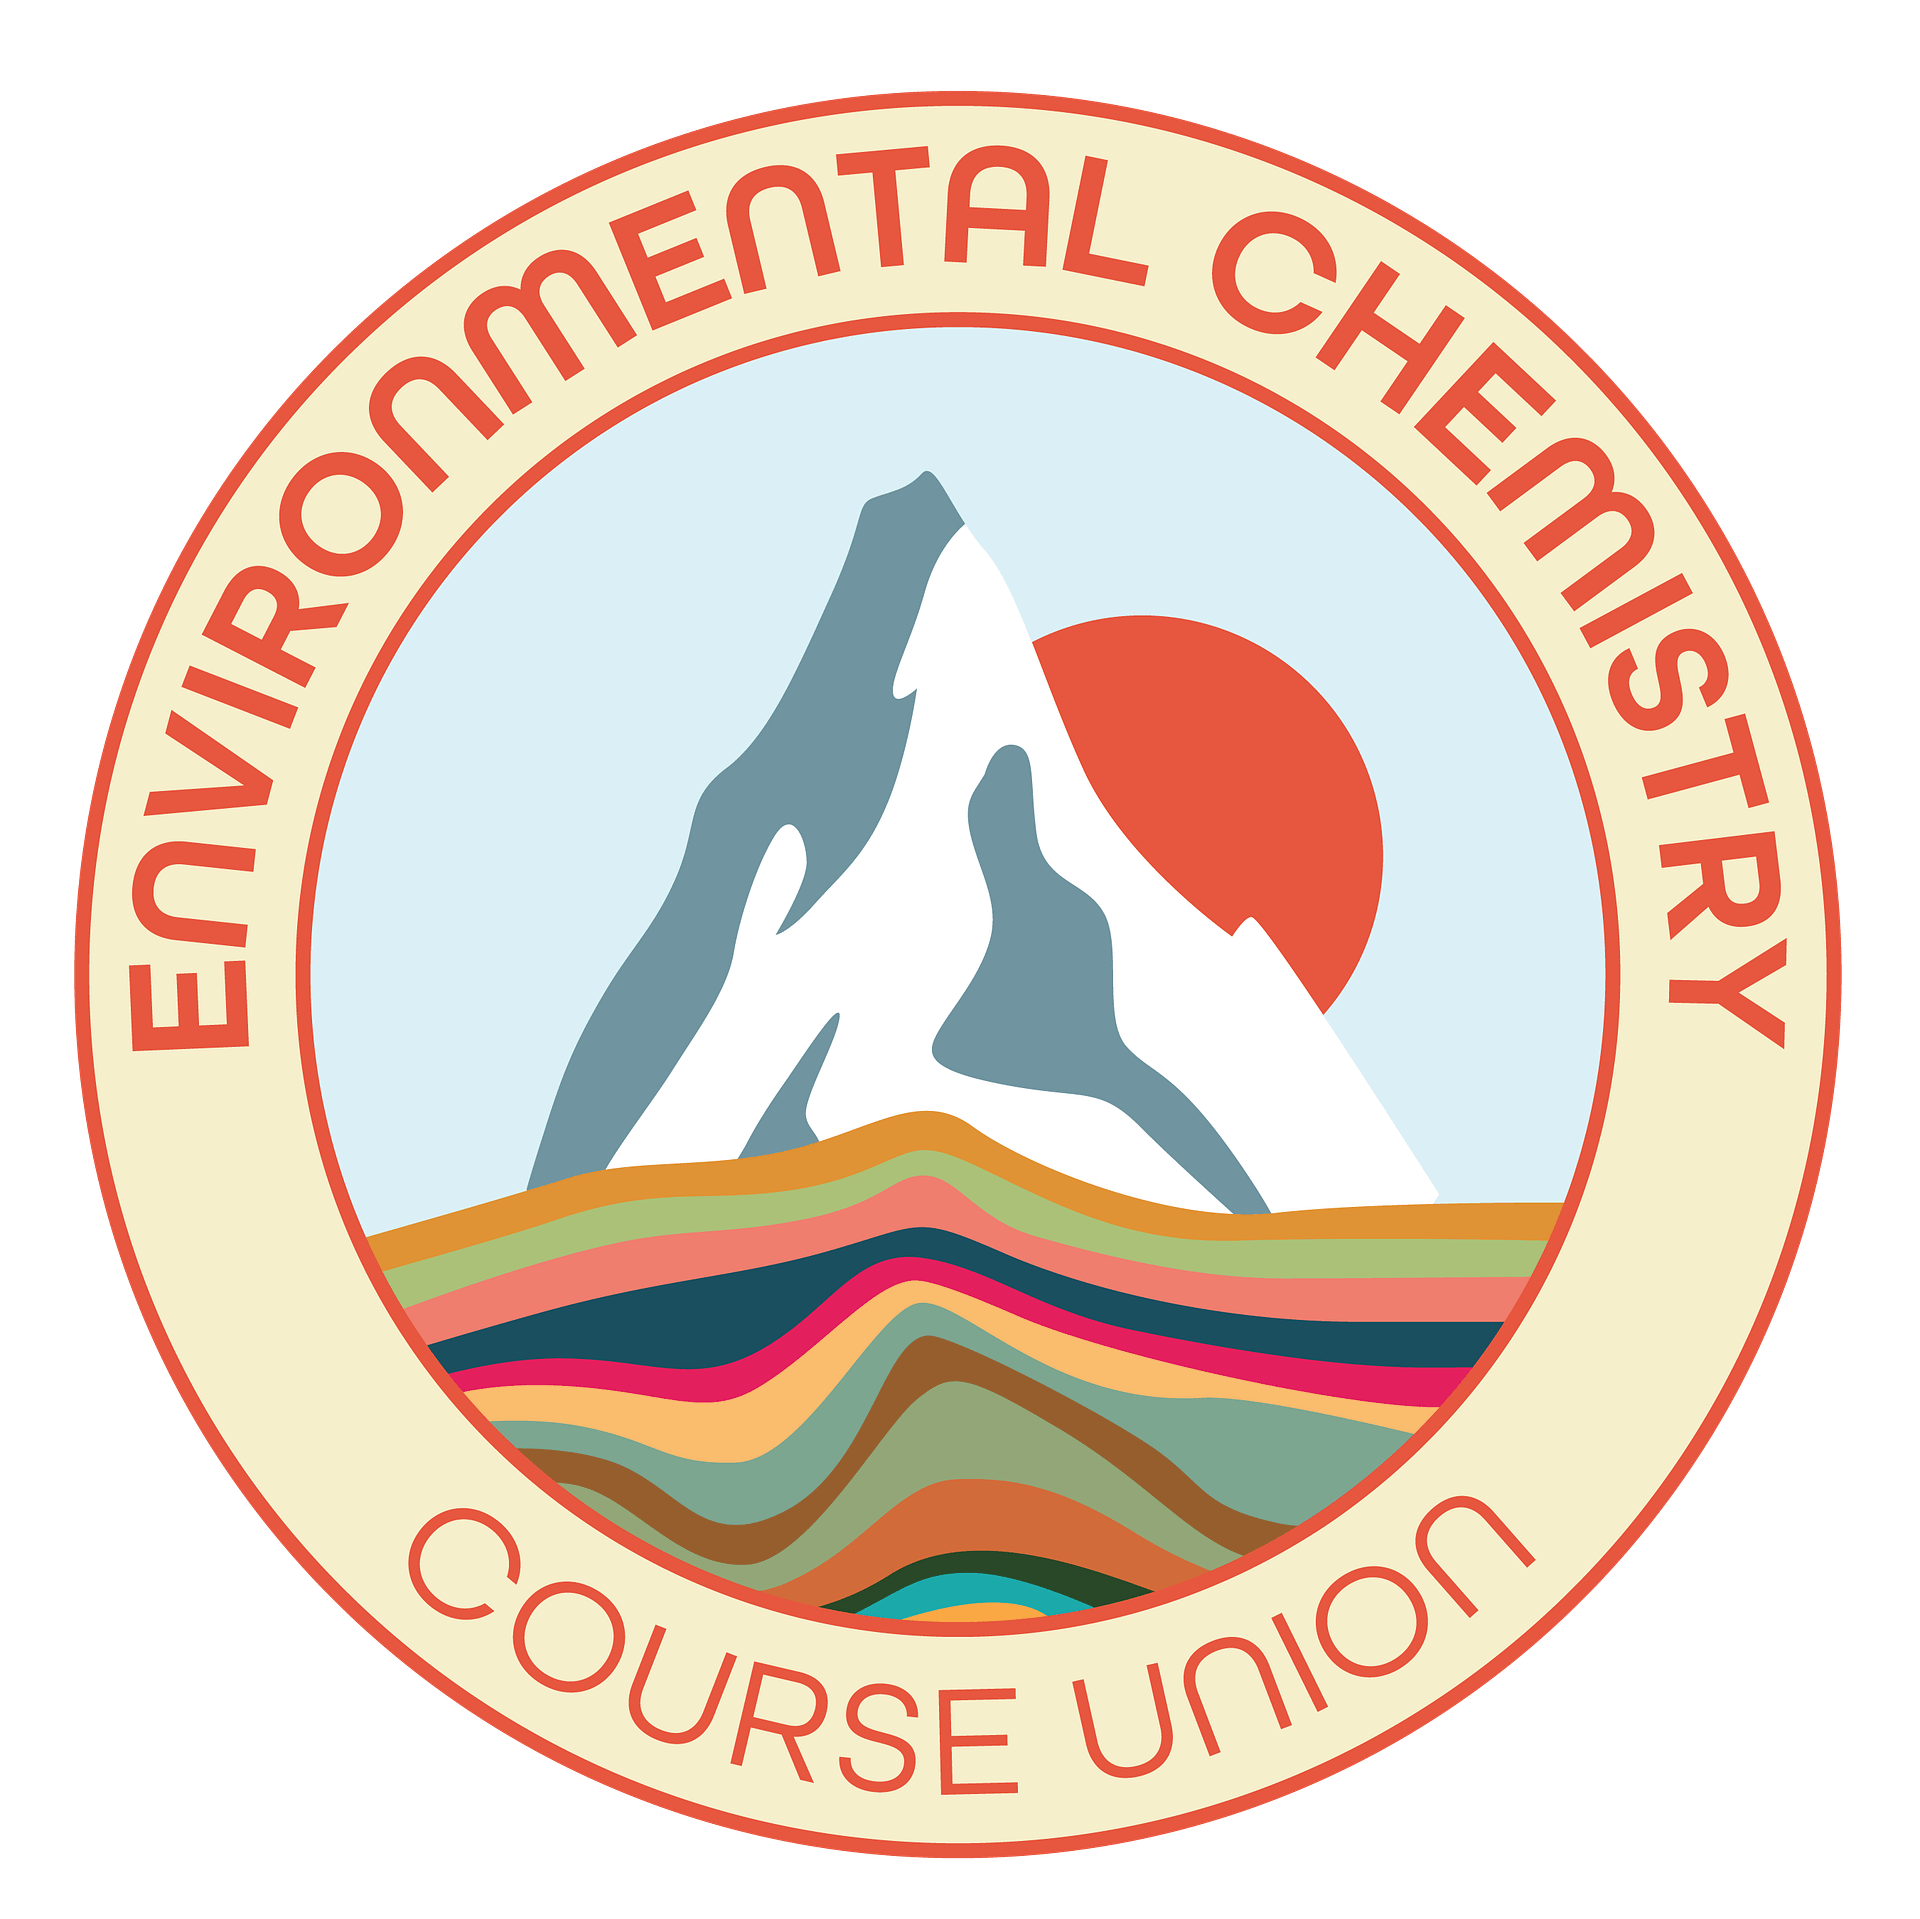 Environmental Chemistry Course Union (ECCU)